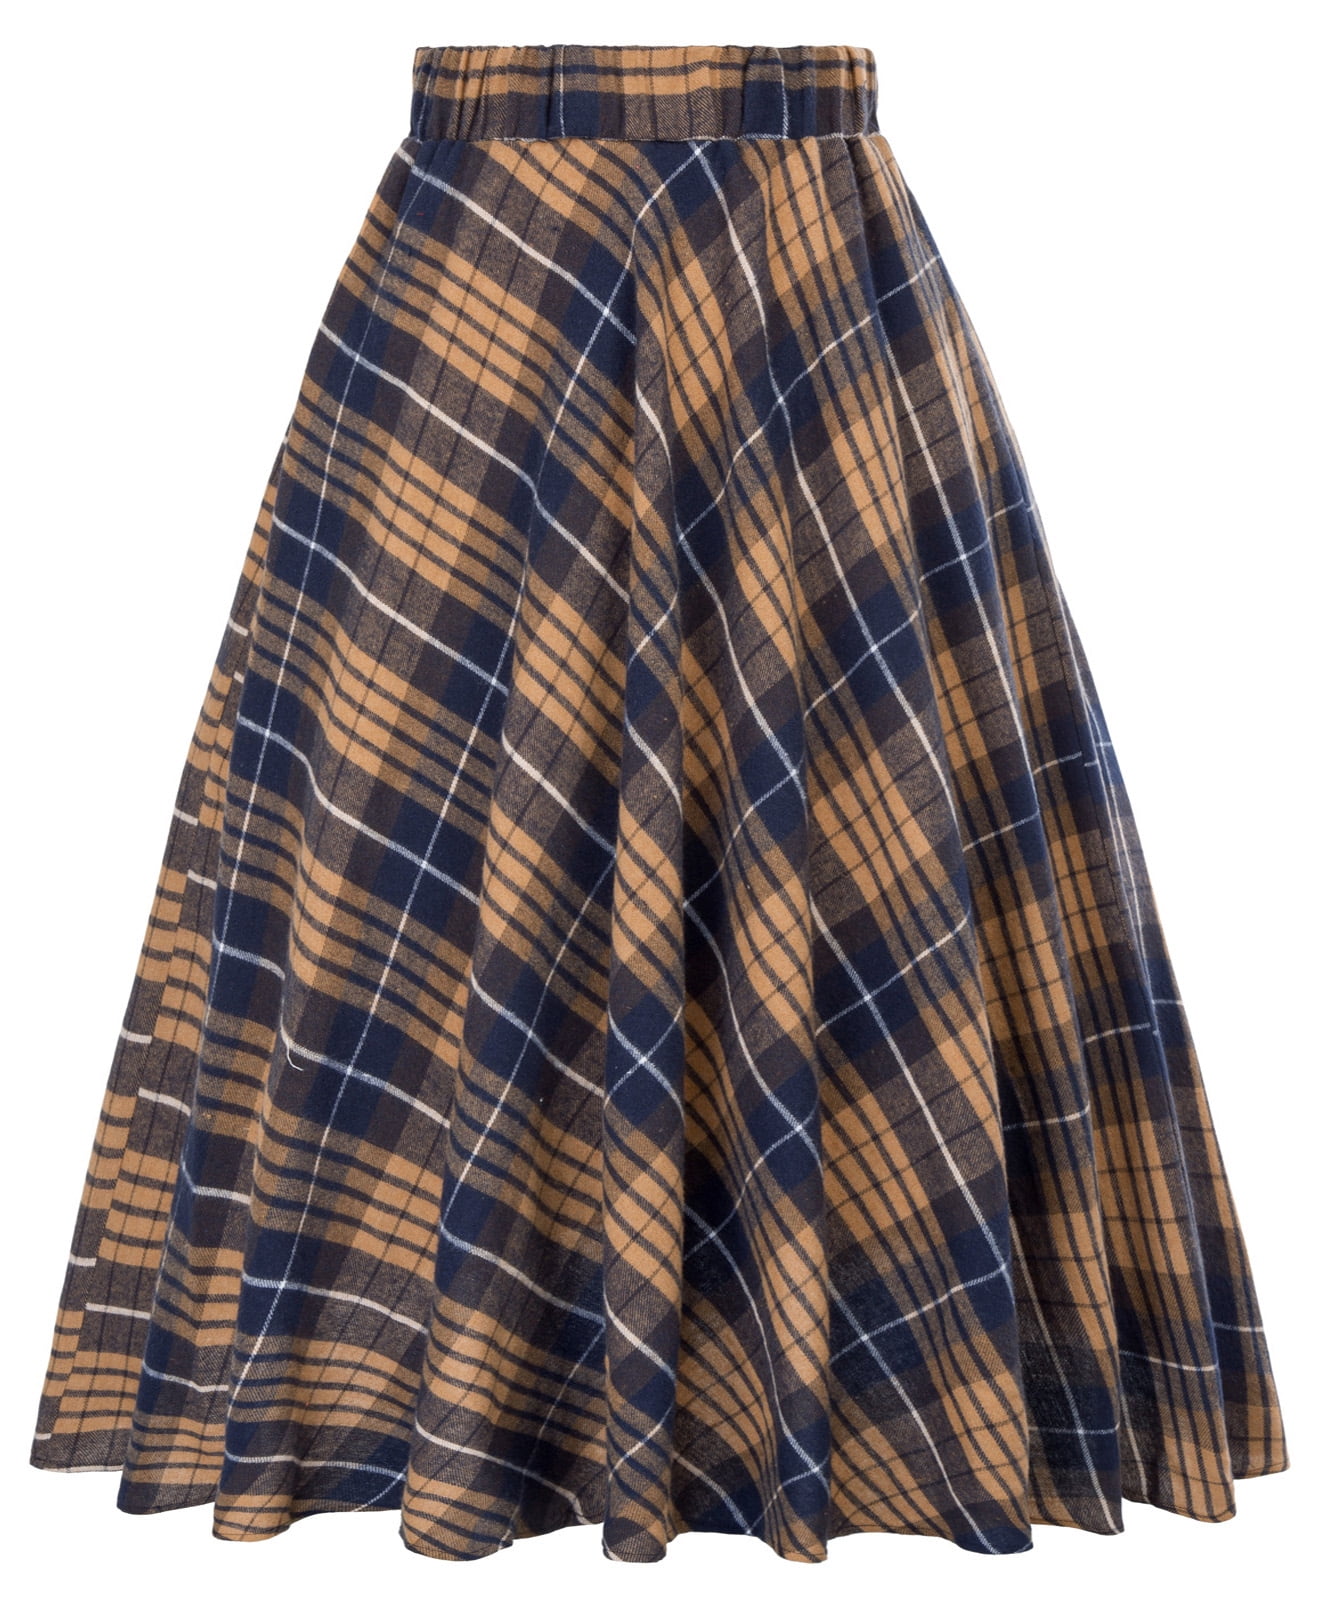 UHUSE - Women's Vintage Fashion Grid Pattern Plaid A-Line Skirt ...